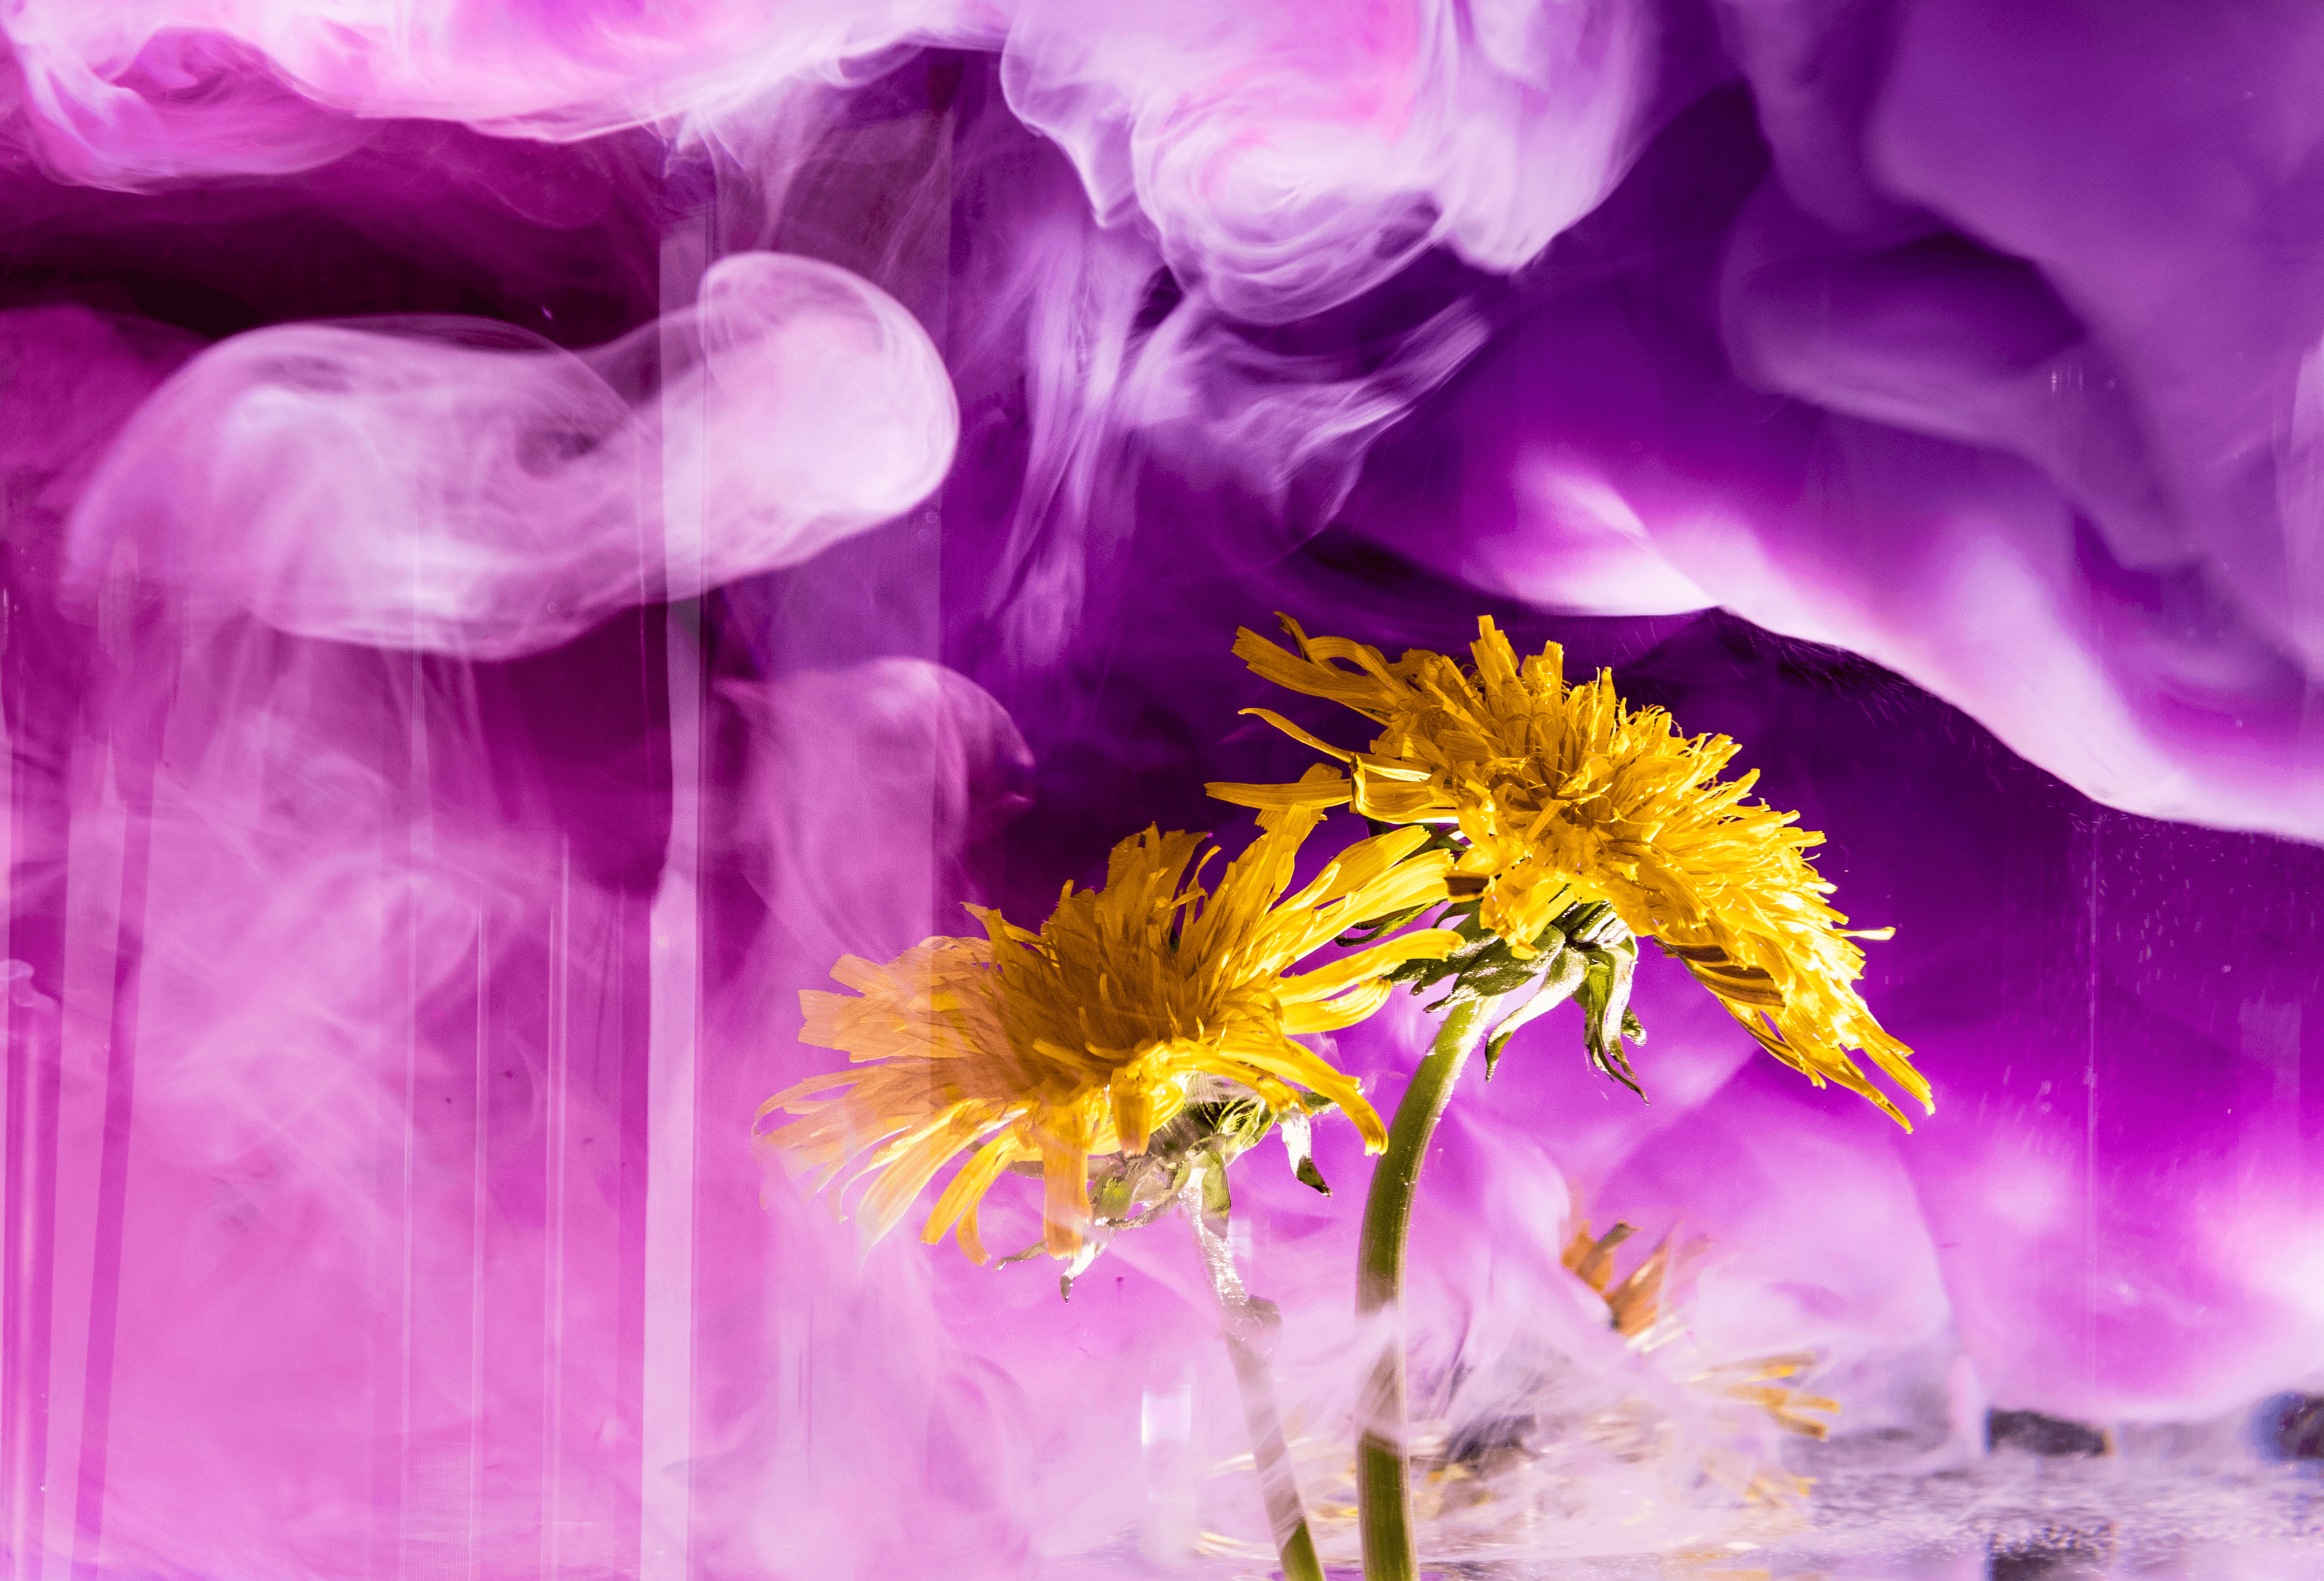 Dandelion in purple fog (Studio Shot)